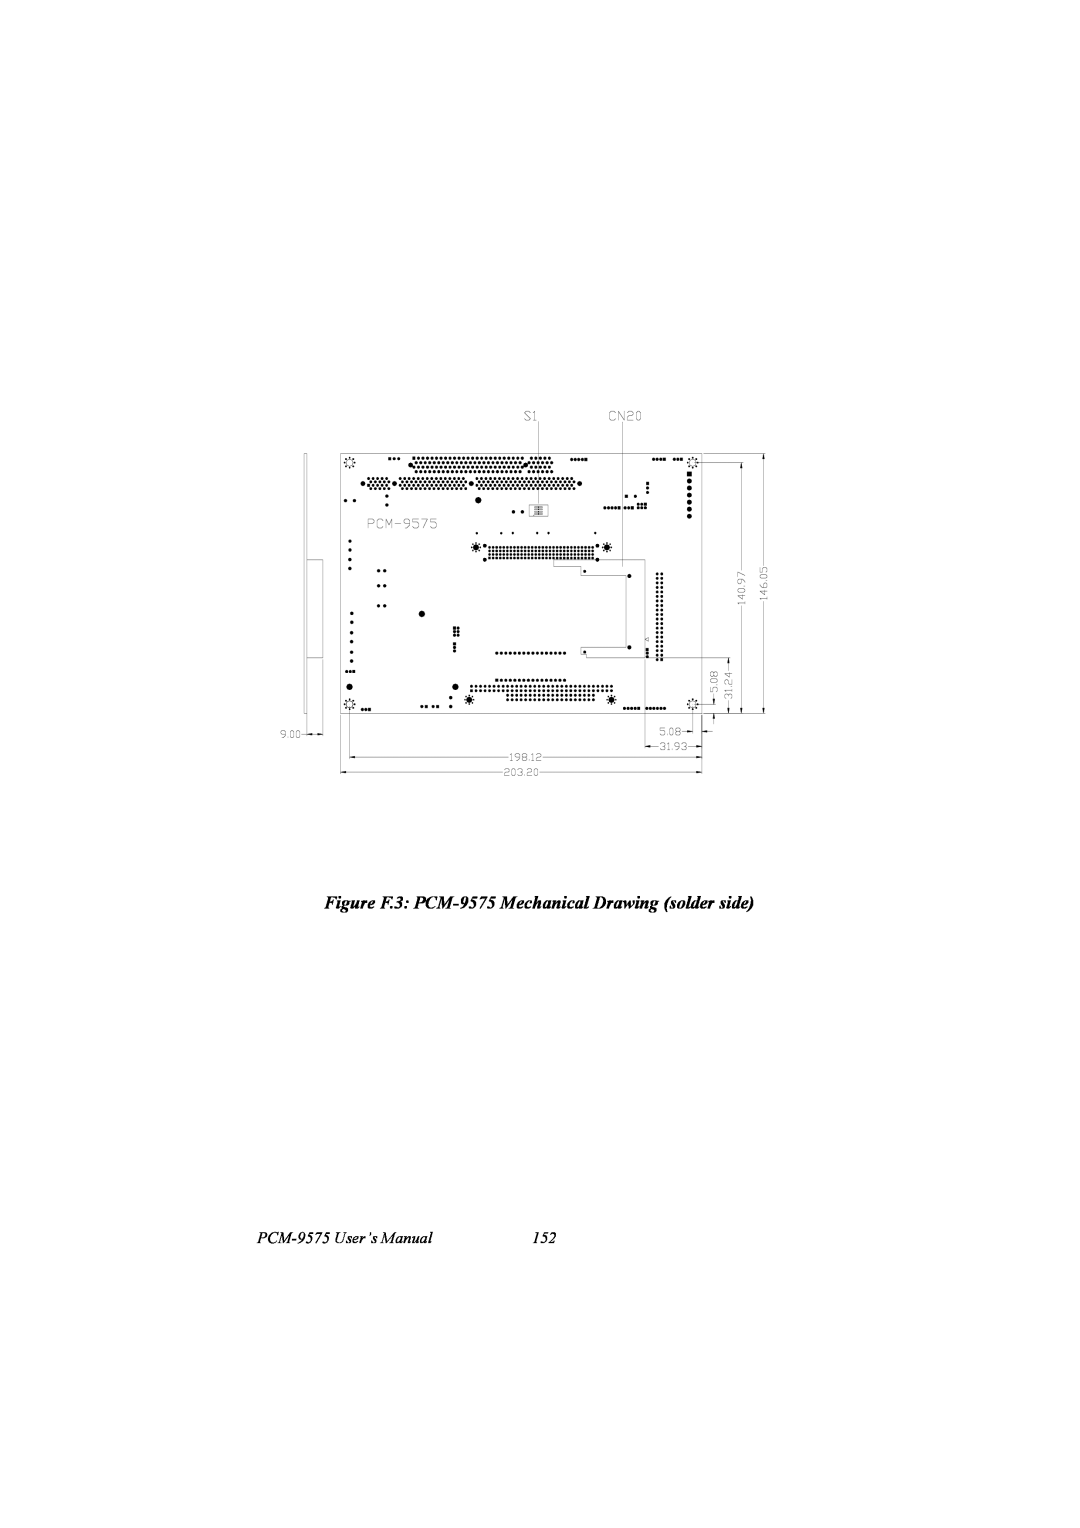 IBM 100/10 user manual Figure F.3 PCM-9575 Mechanical Drawing solder side, PCM-9575 User’s Manual 